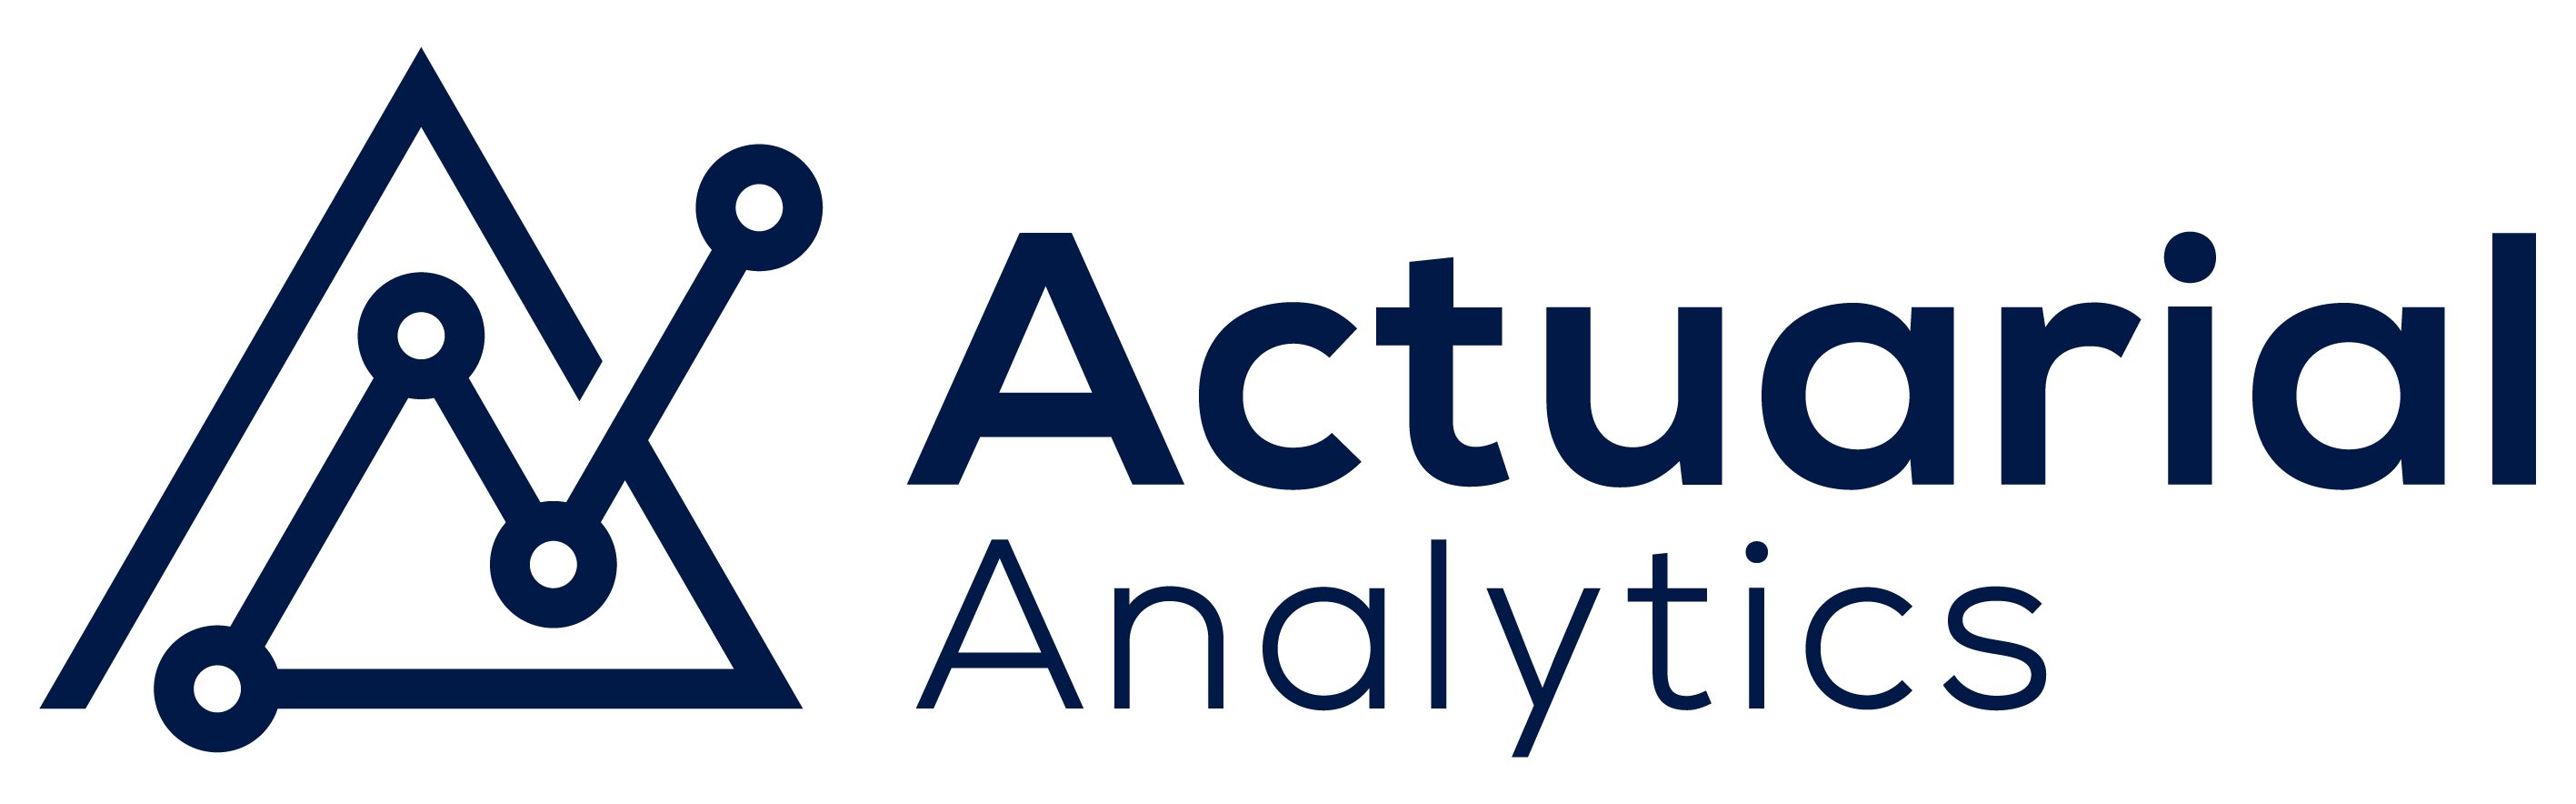 Actuarial Analytics Logo